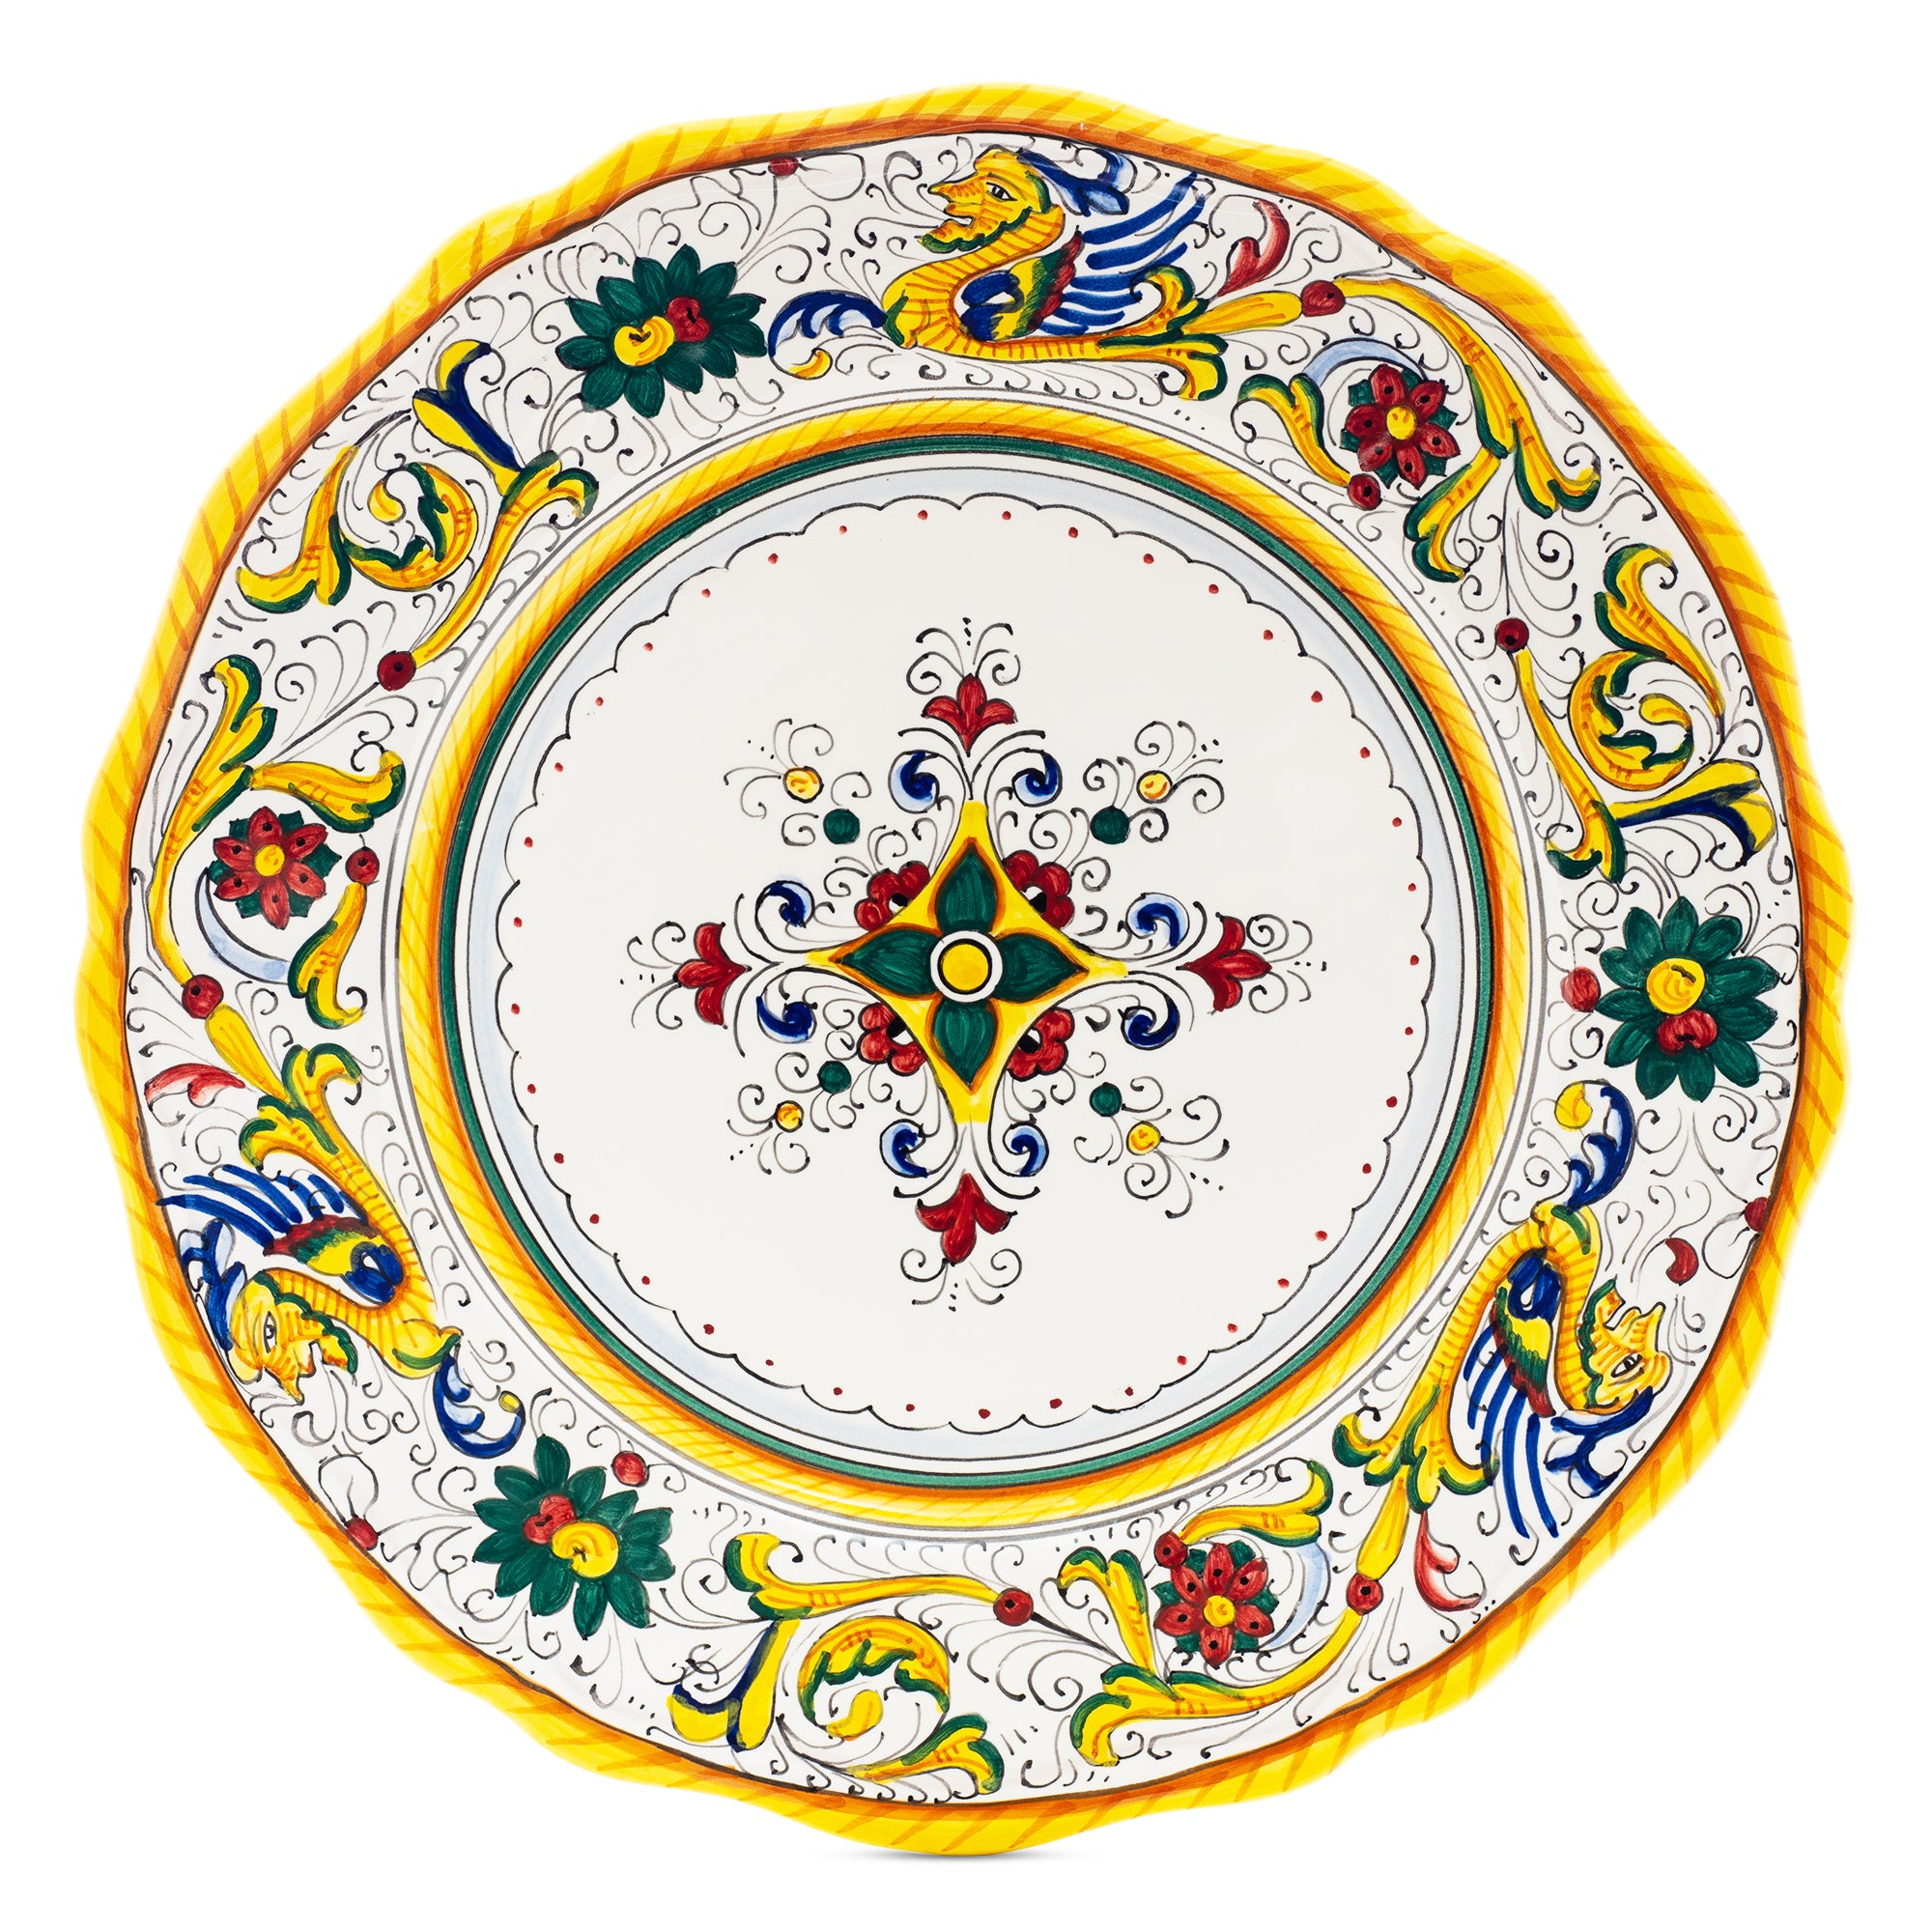 Raffaellesco Dinner Plate, Full Design Italian Ceramics from Deruta, Majolica Pottery